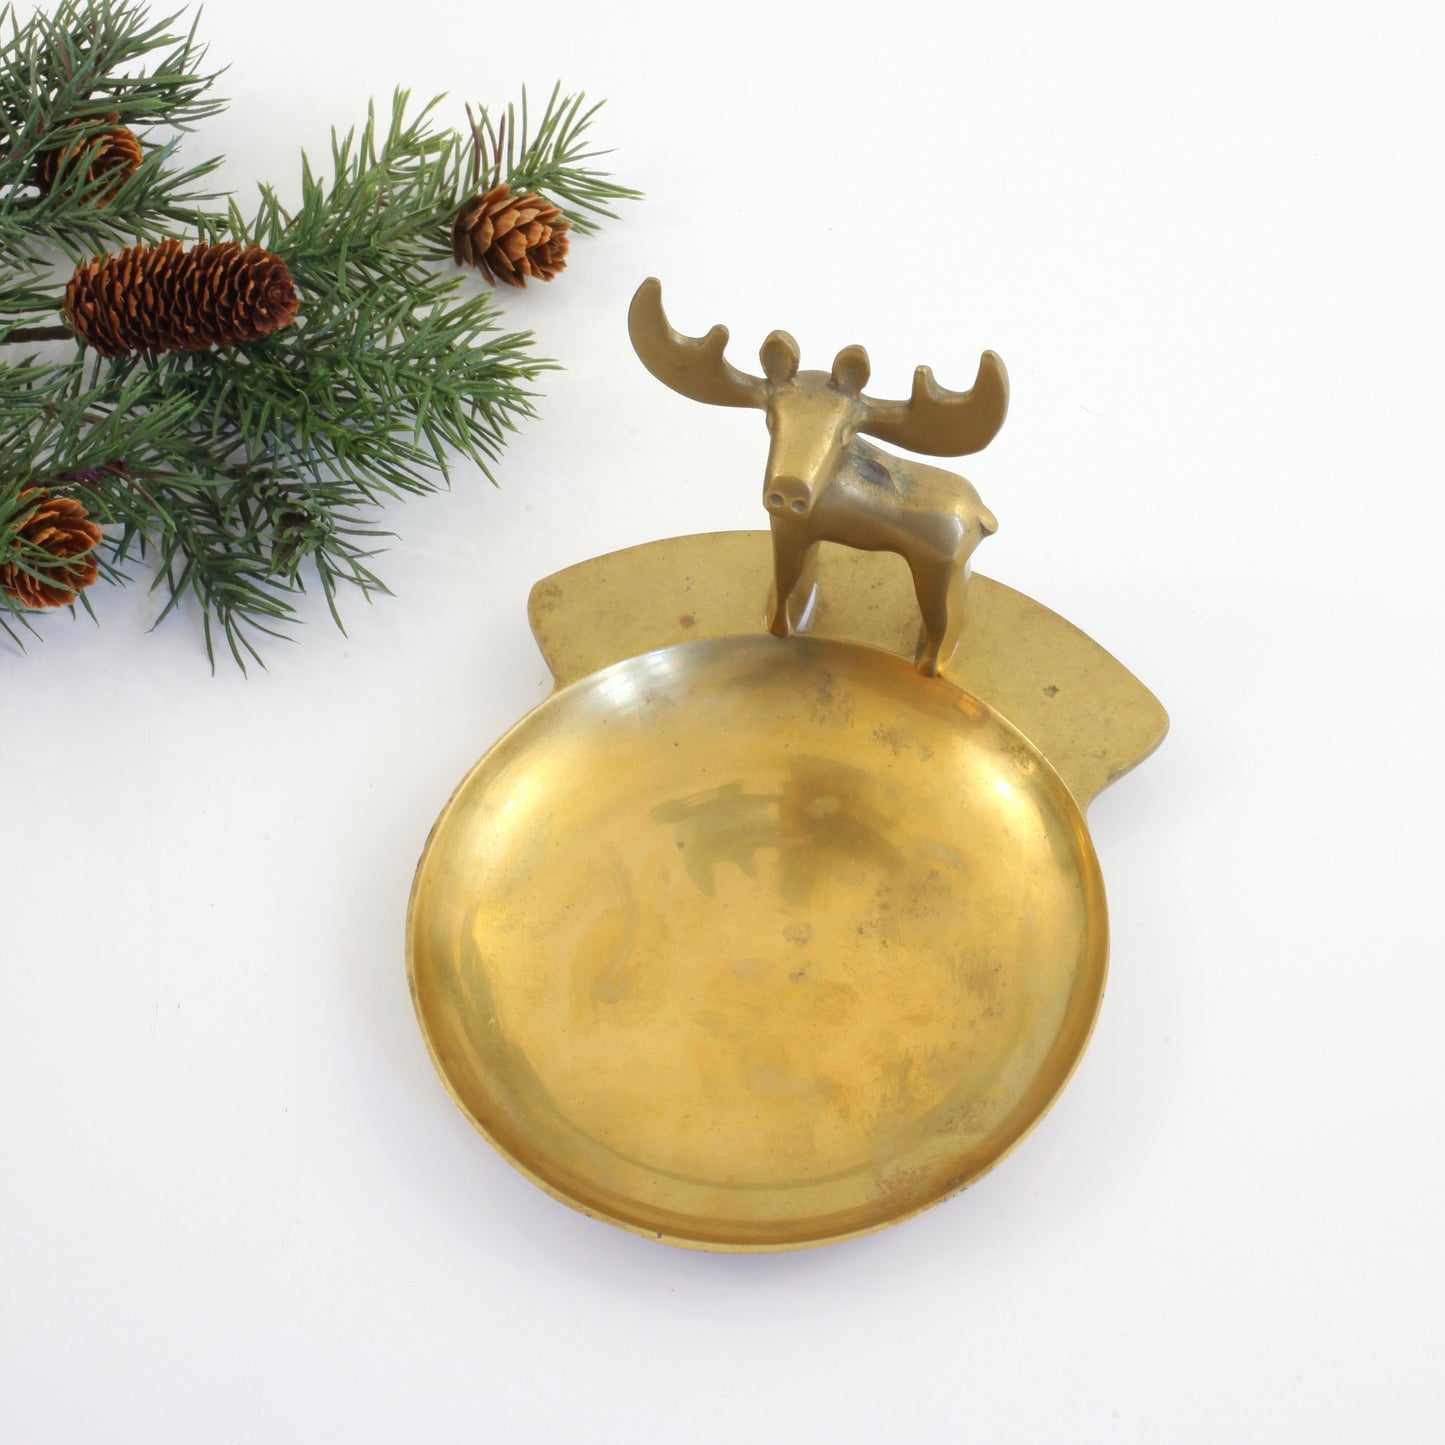 SOLD - Vintage Brass Moose Trinket Dish / Loyal Order of Moose Membership Appreciation Award